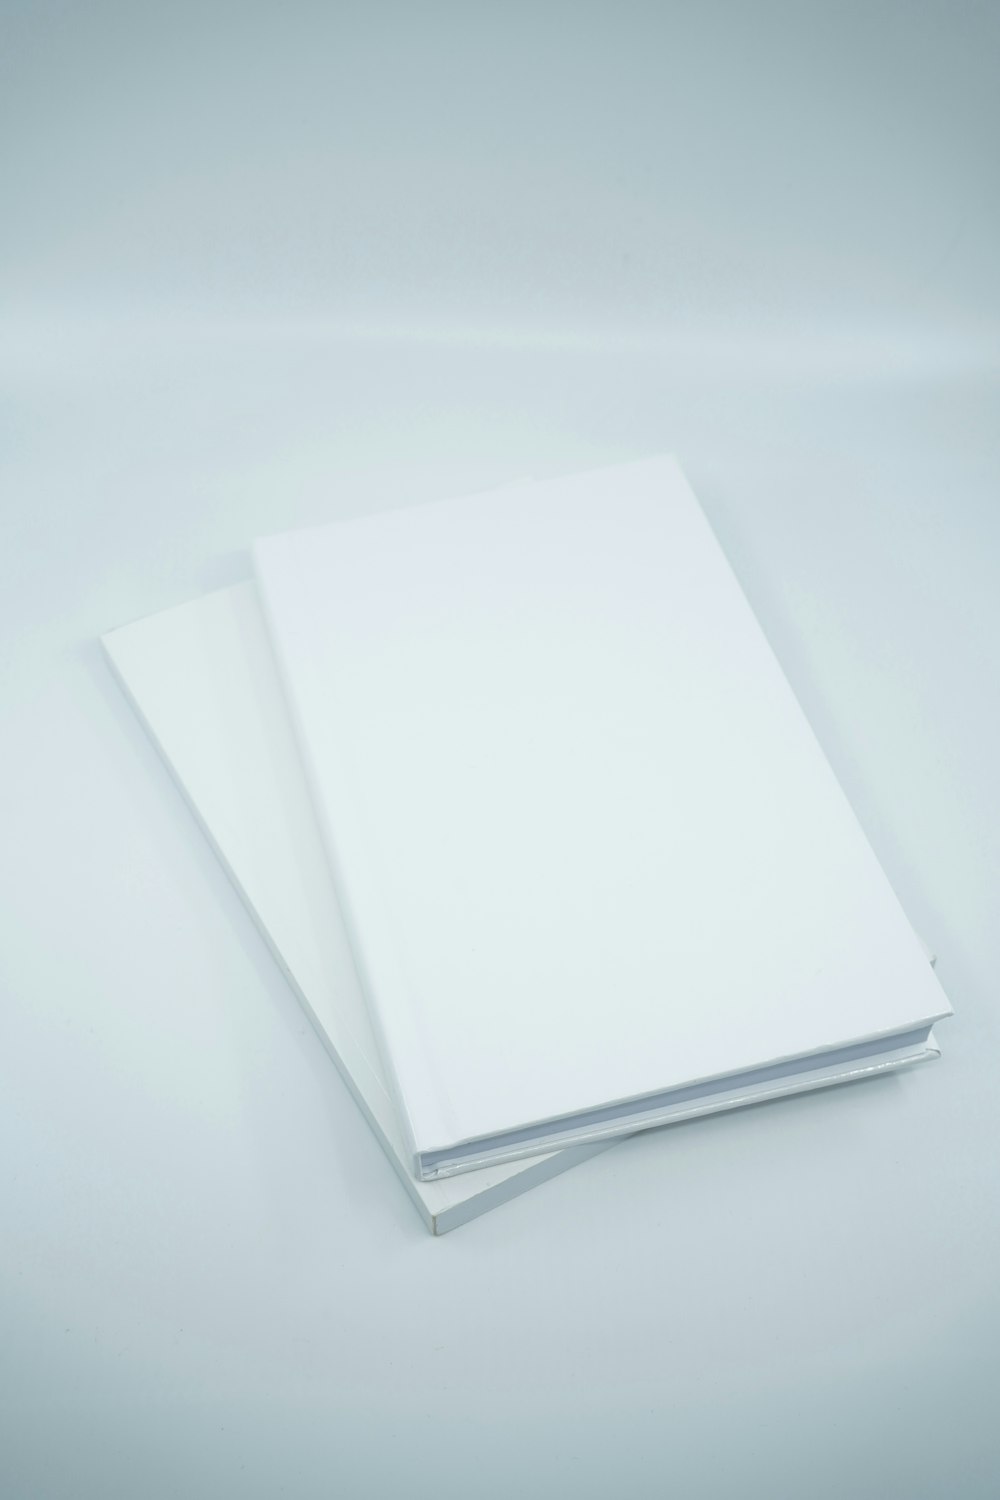 white printer paper on white surface